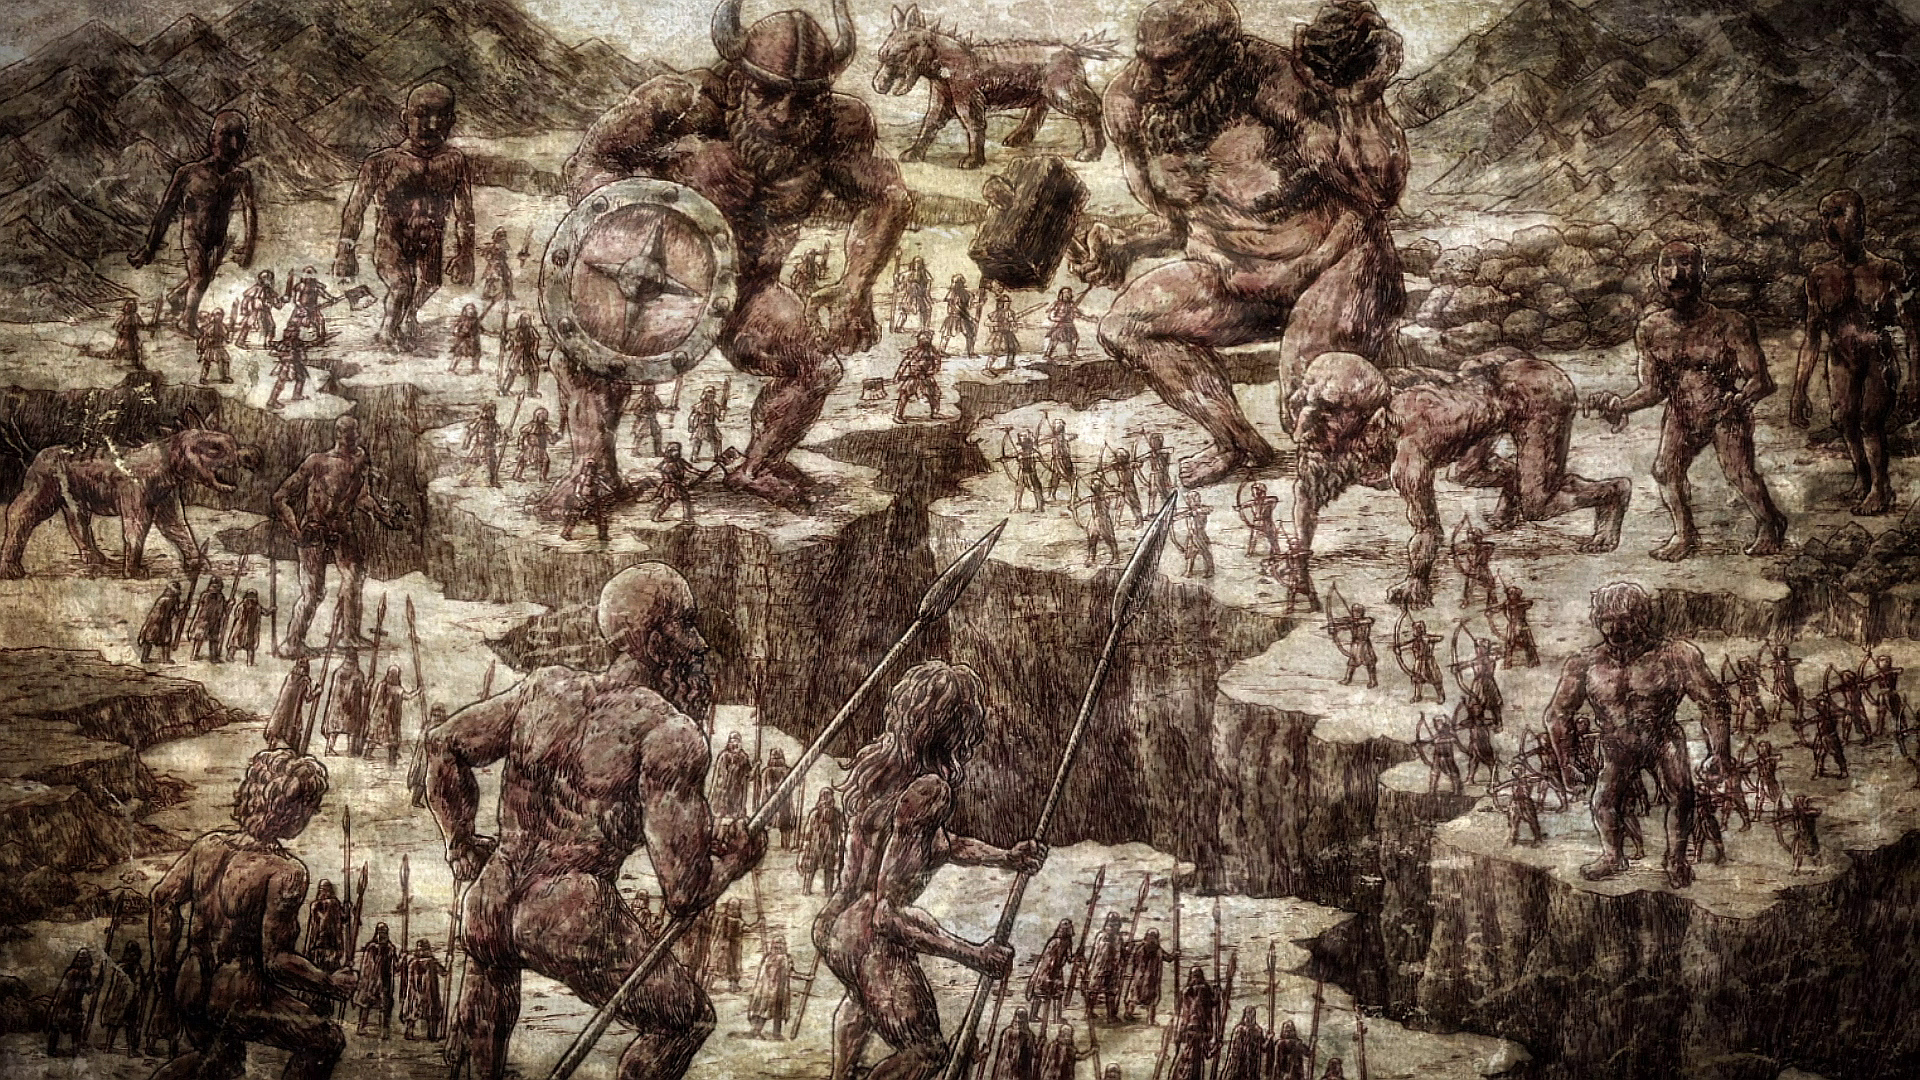 Attack on Titan: final da 3ª temporada indica grande conflito